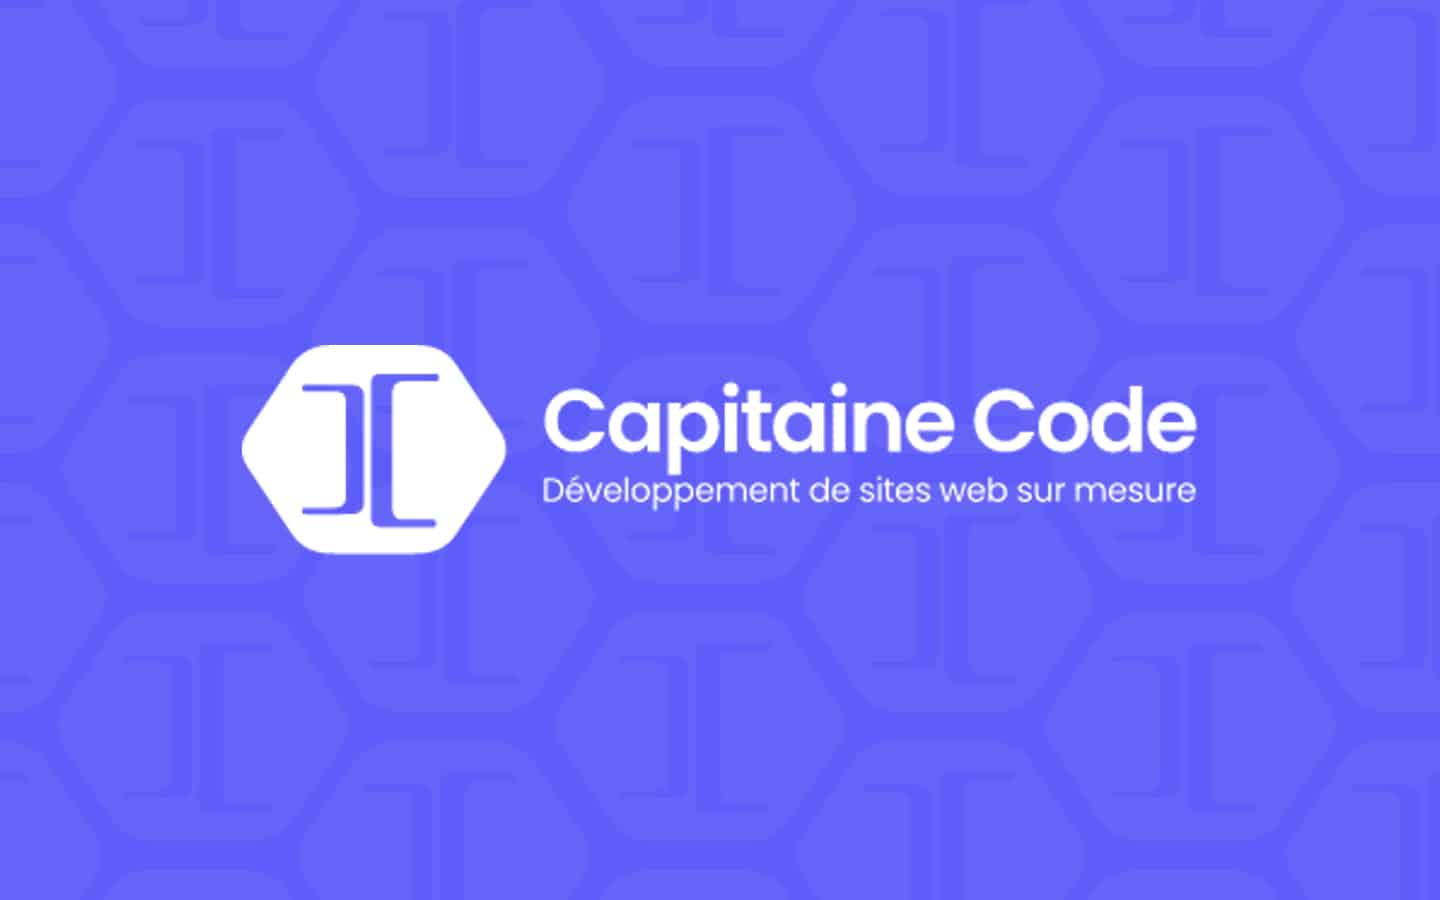 Capitaine Code